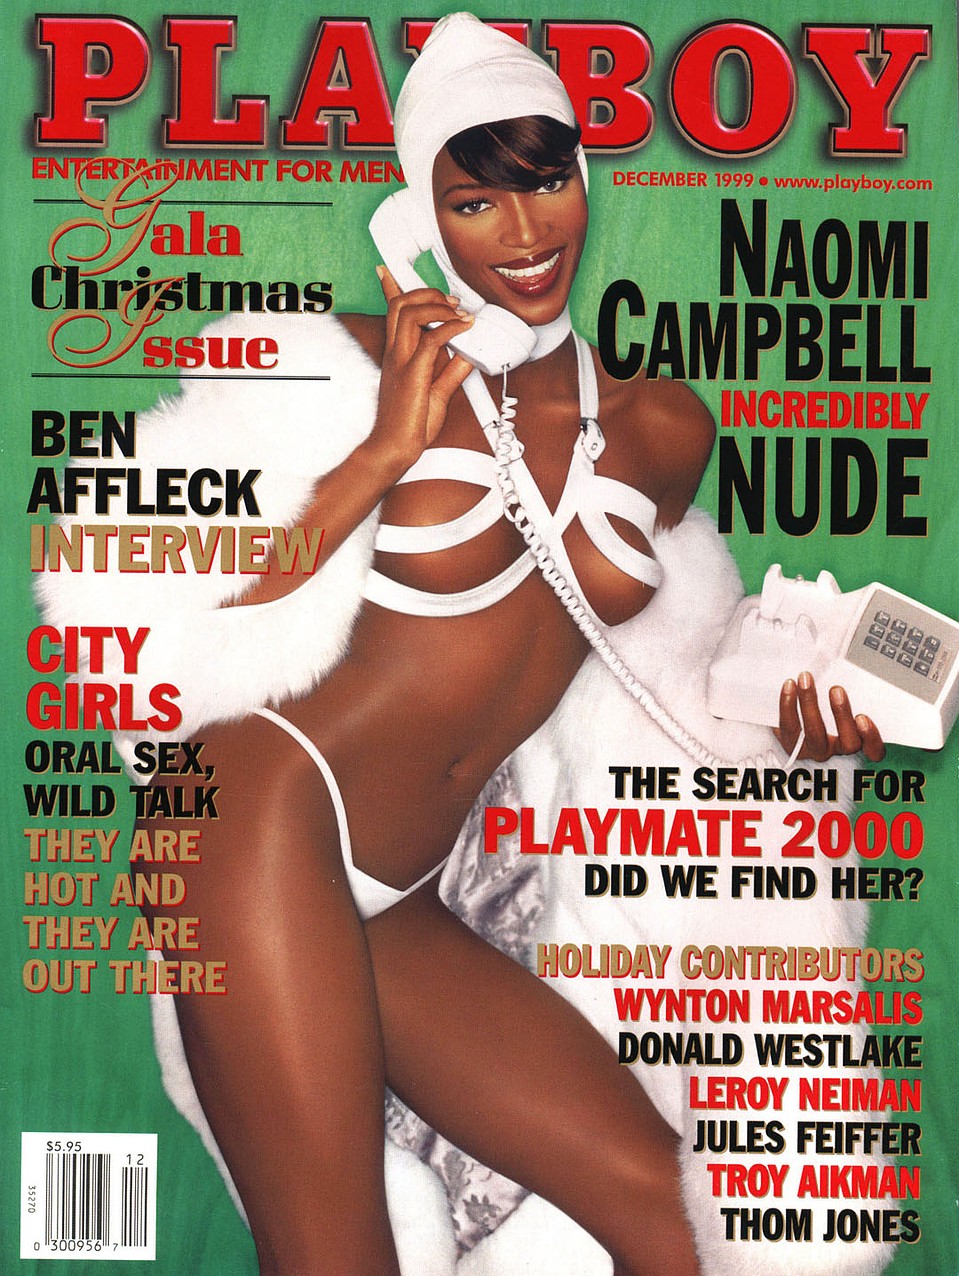 Наоми на обложке журнала Playboy в 1999 году. Фото: GLOBAL LOOK PRESS